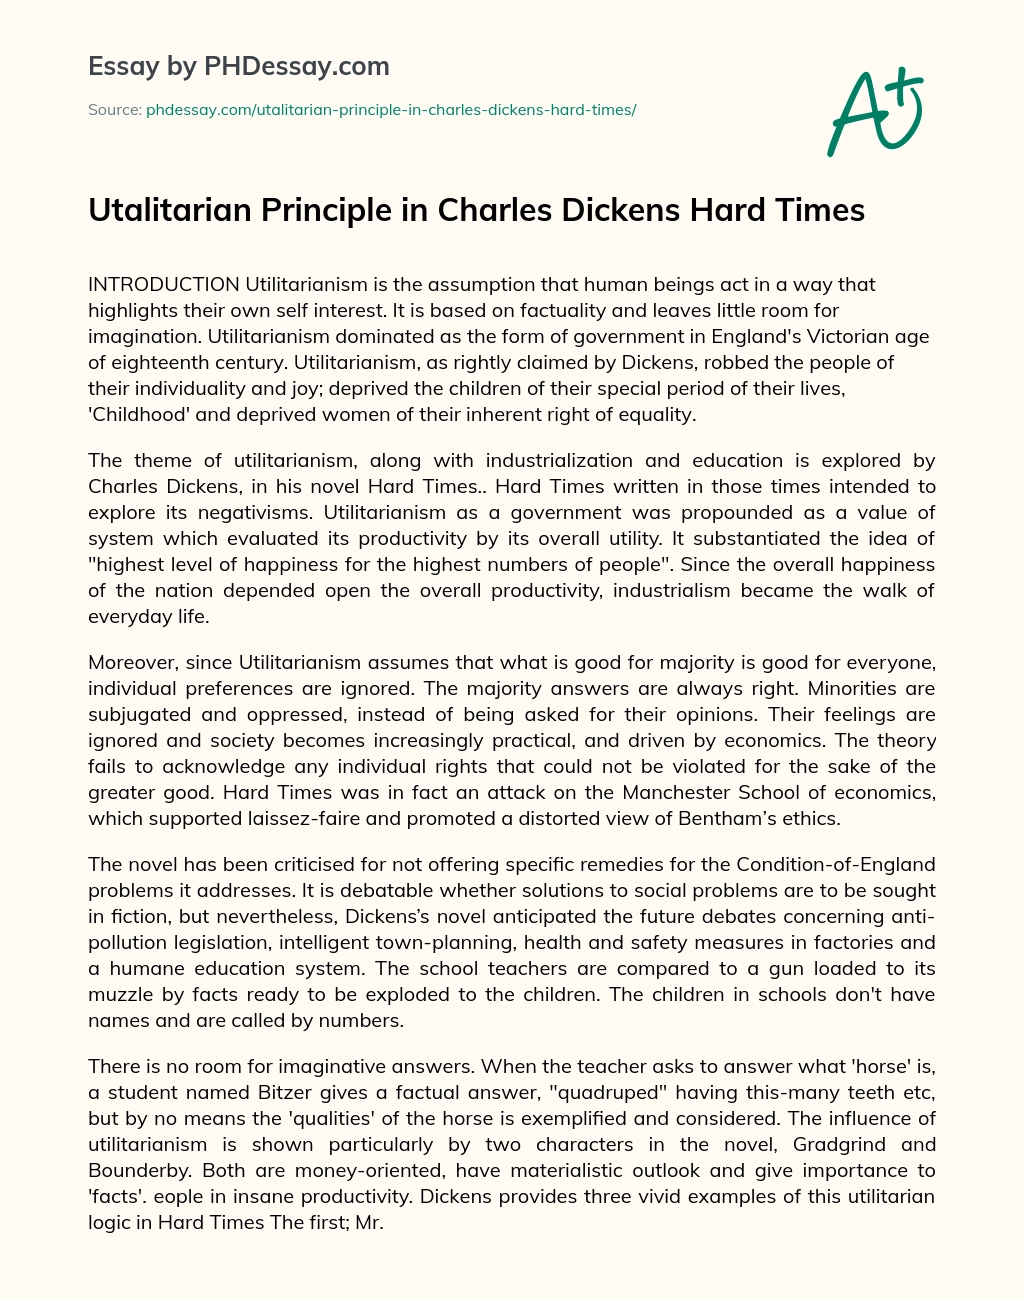 Utalitarian Principle in Charles Dickens Hard Times essay